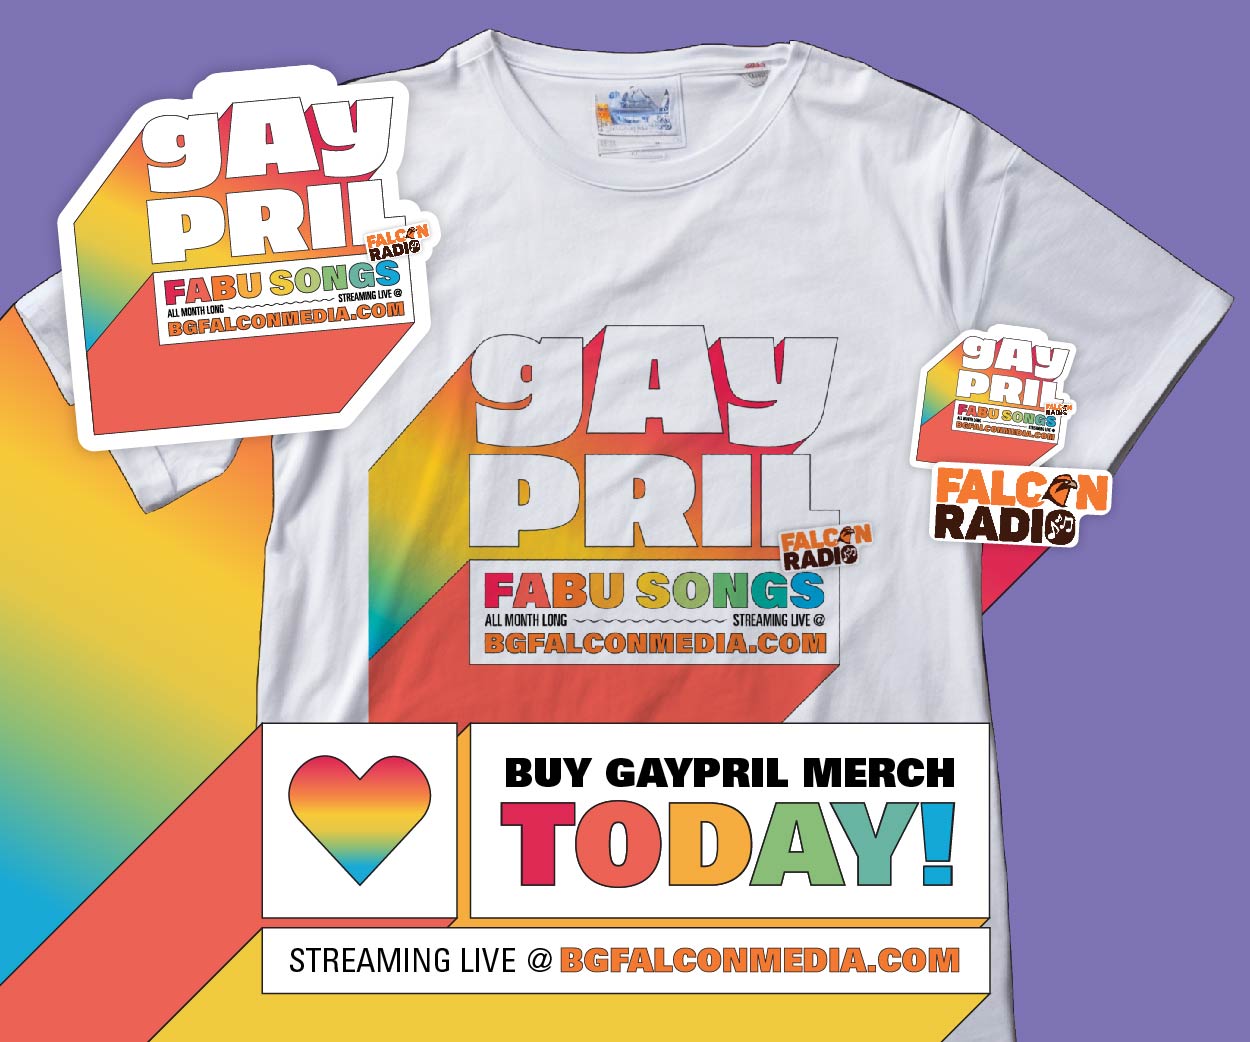 Gaypril t-shirt - songs